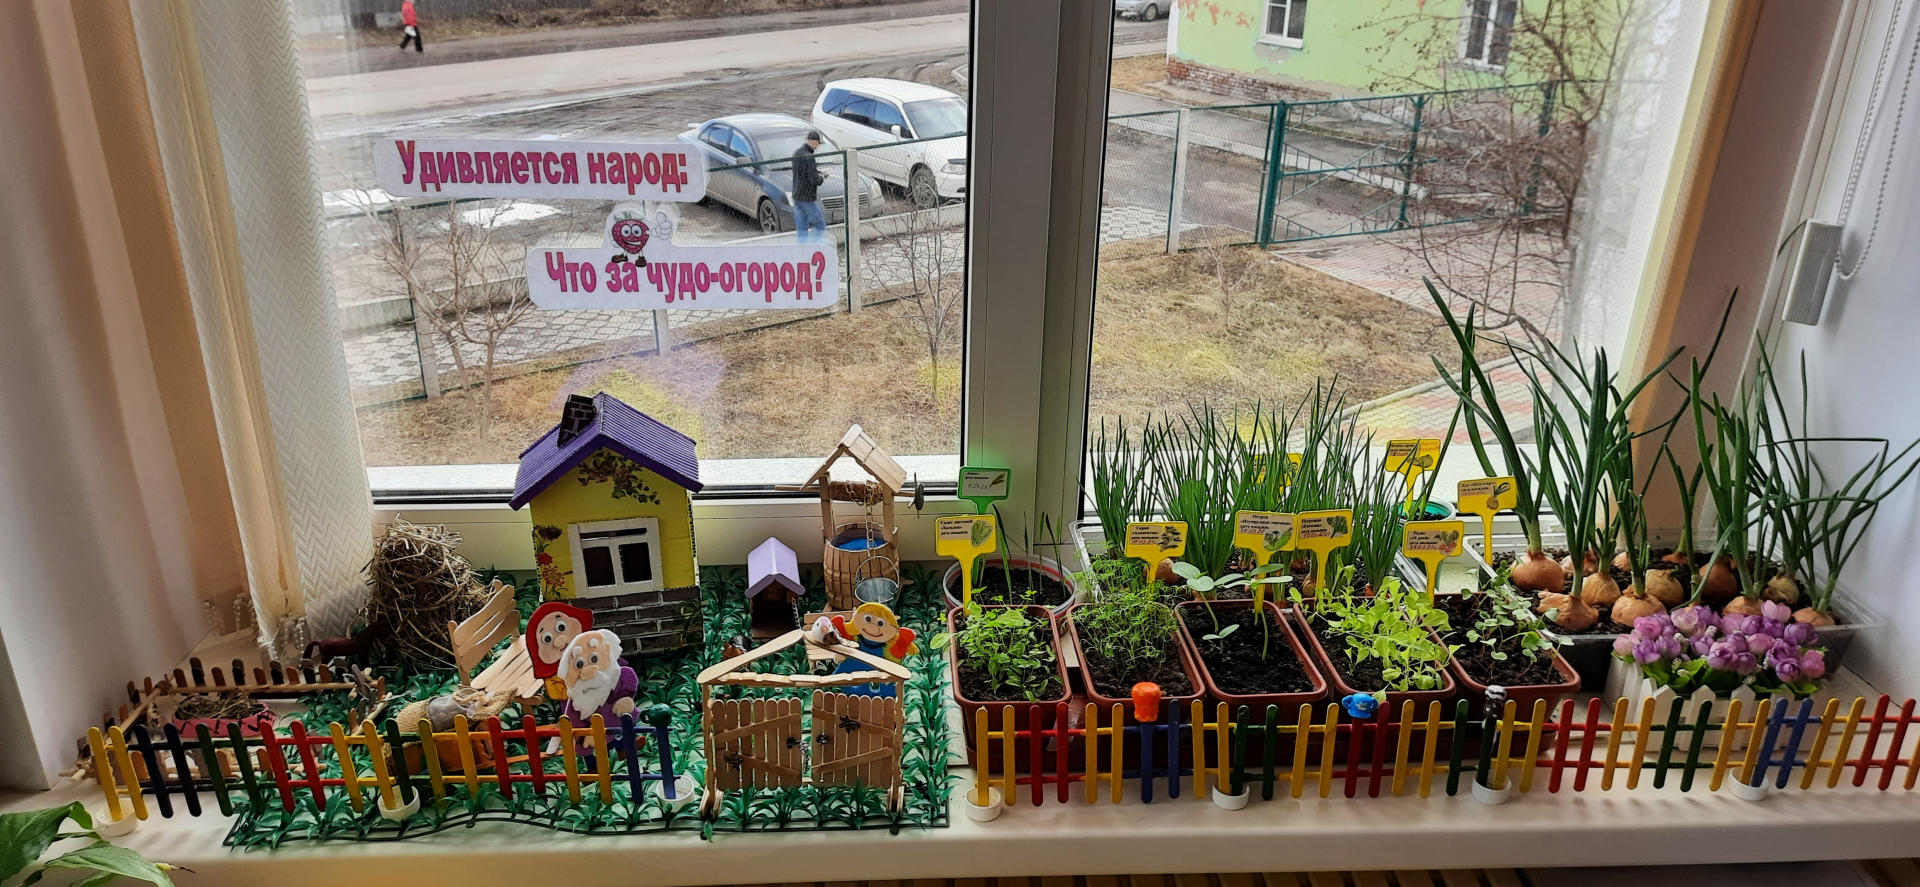 Посадили огород посмотрите что. Огород на окне. Конкурс огород на окне. Конкурс огород на подоконнике в детском саду. Огород на окне название.